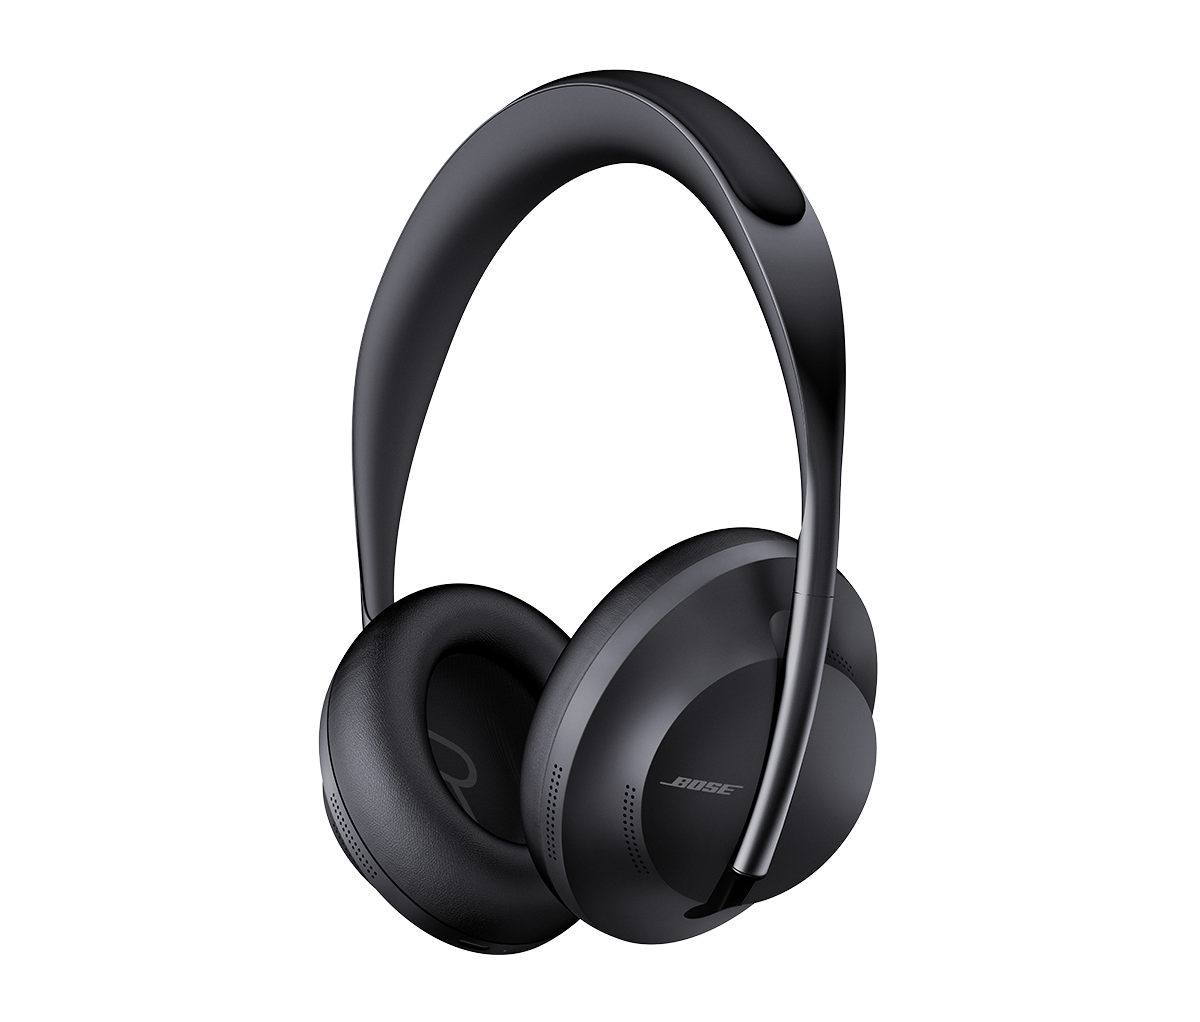 Aplaudir emulsión En detalle Smart Noise Cancelling Headphones 700 | Bose